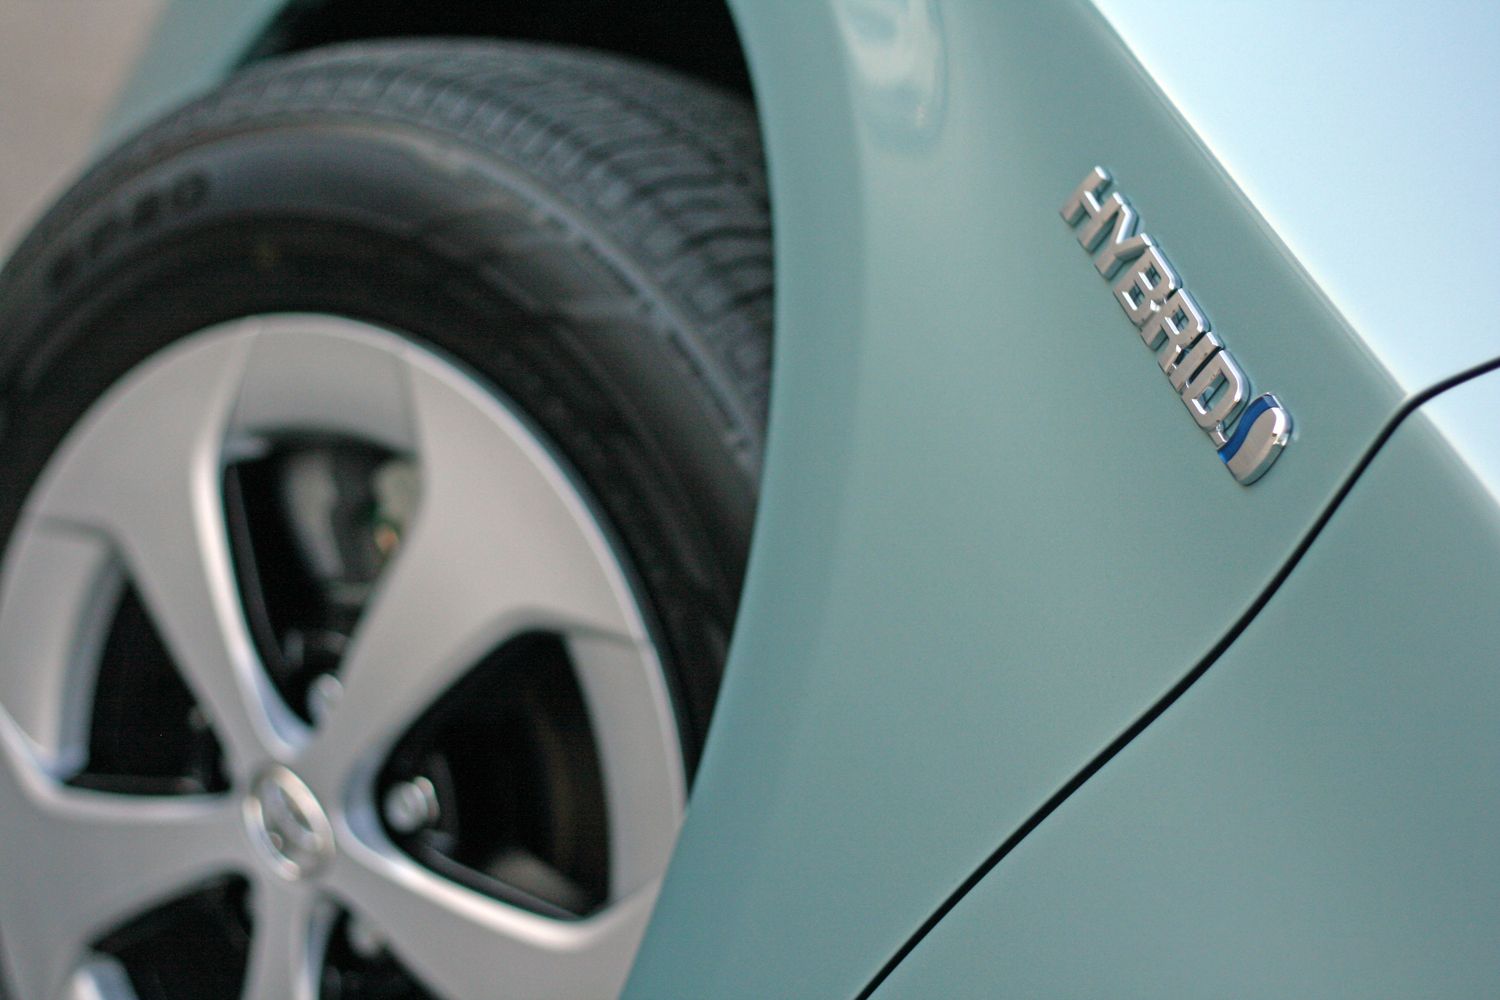 2014 Toyota Prius - Driven